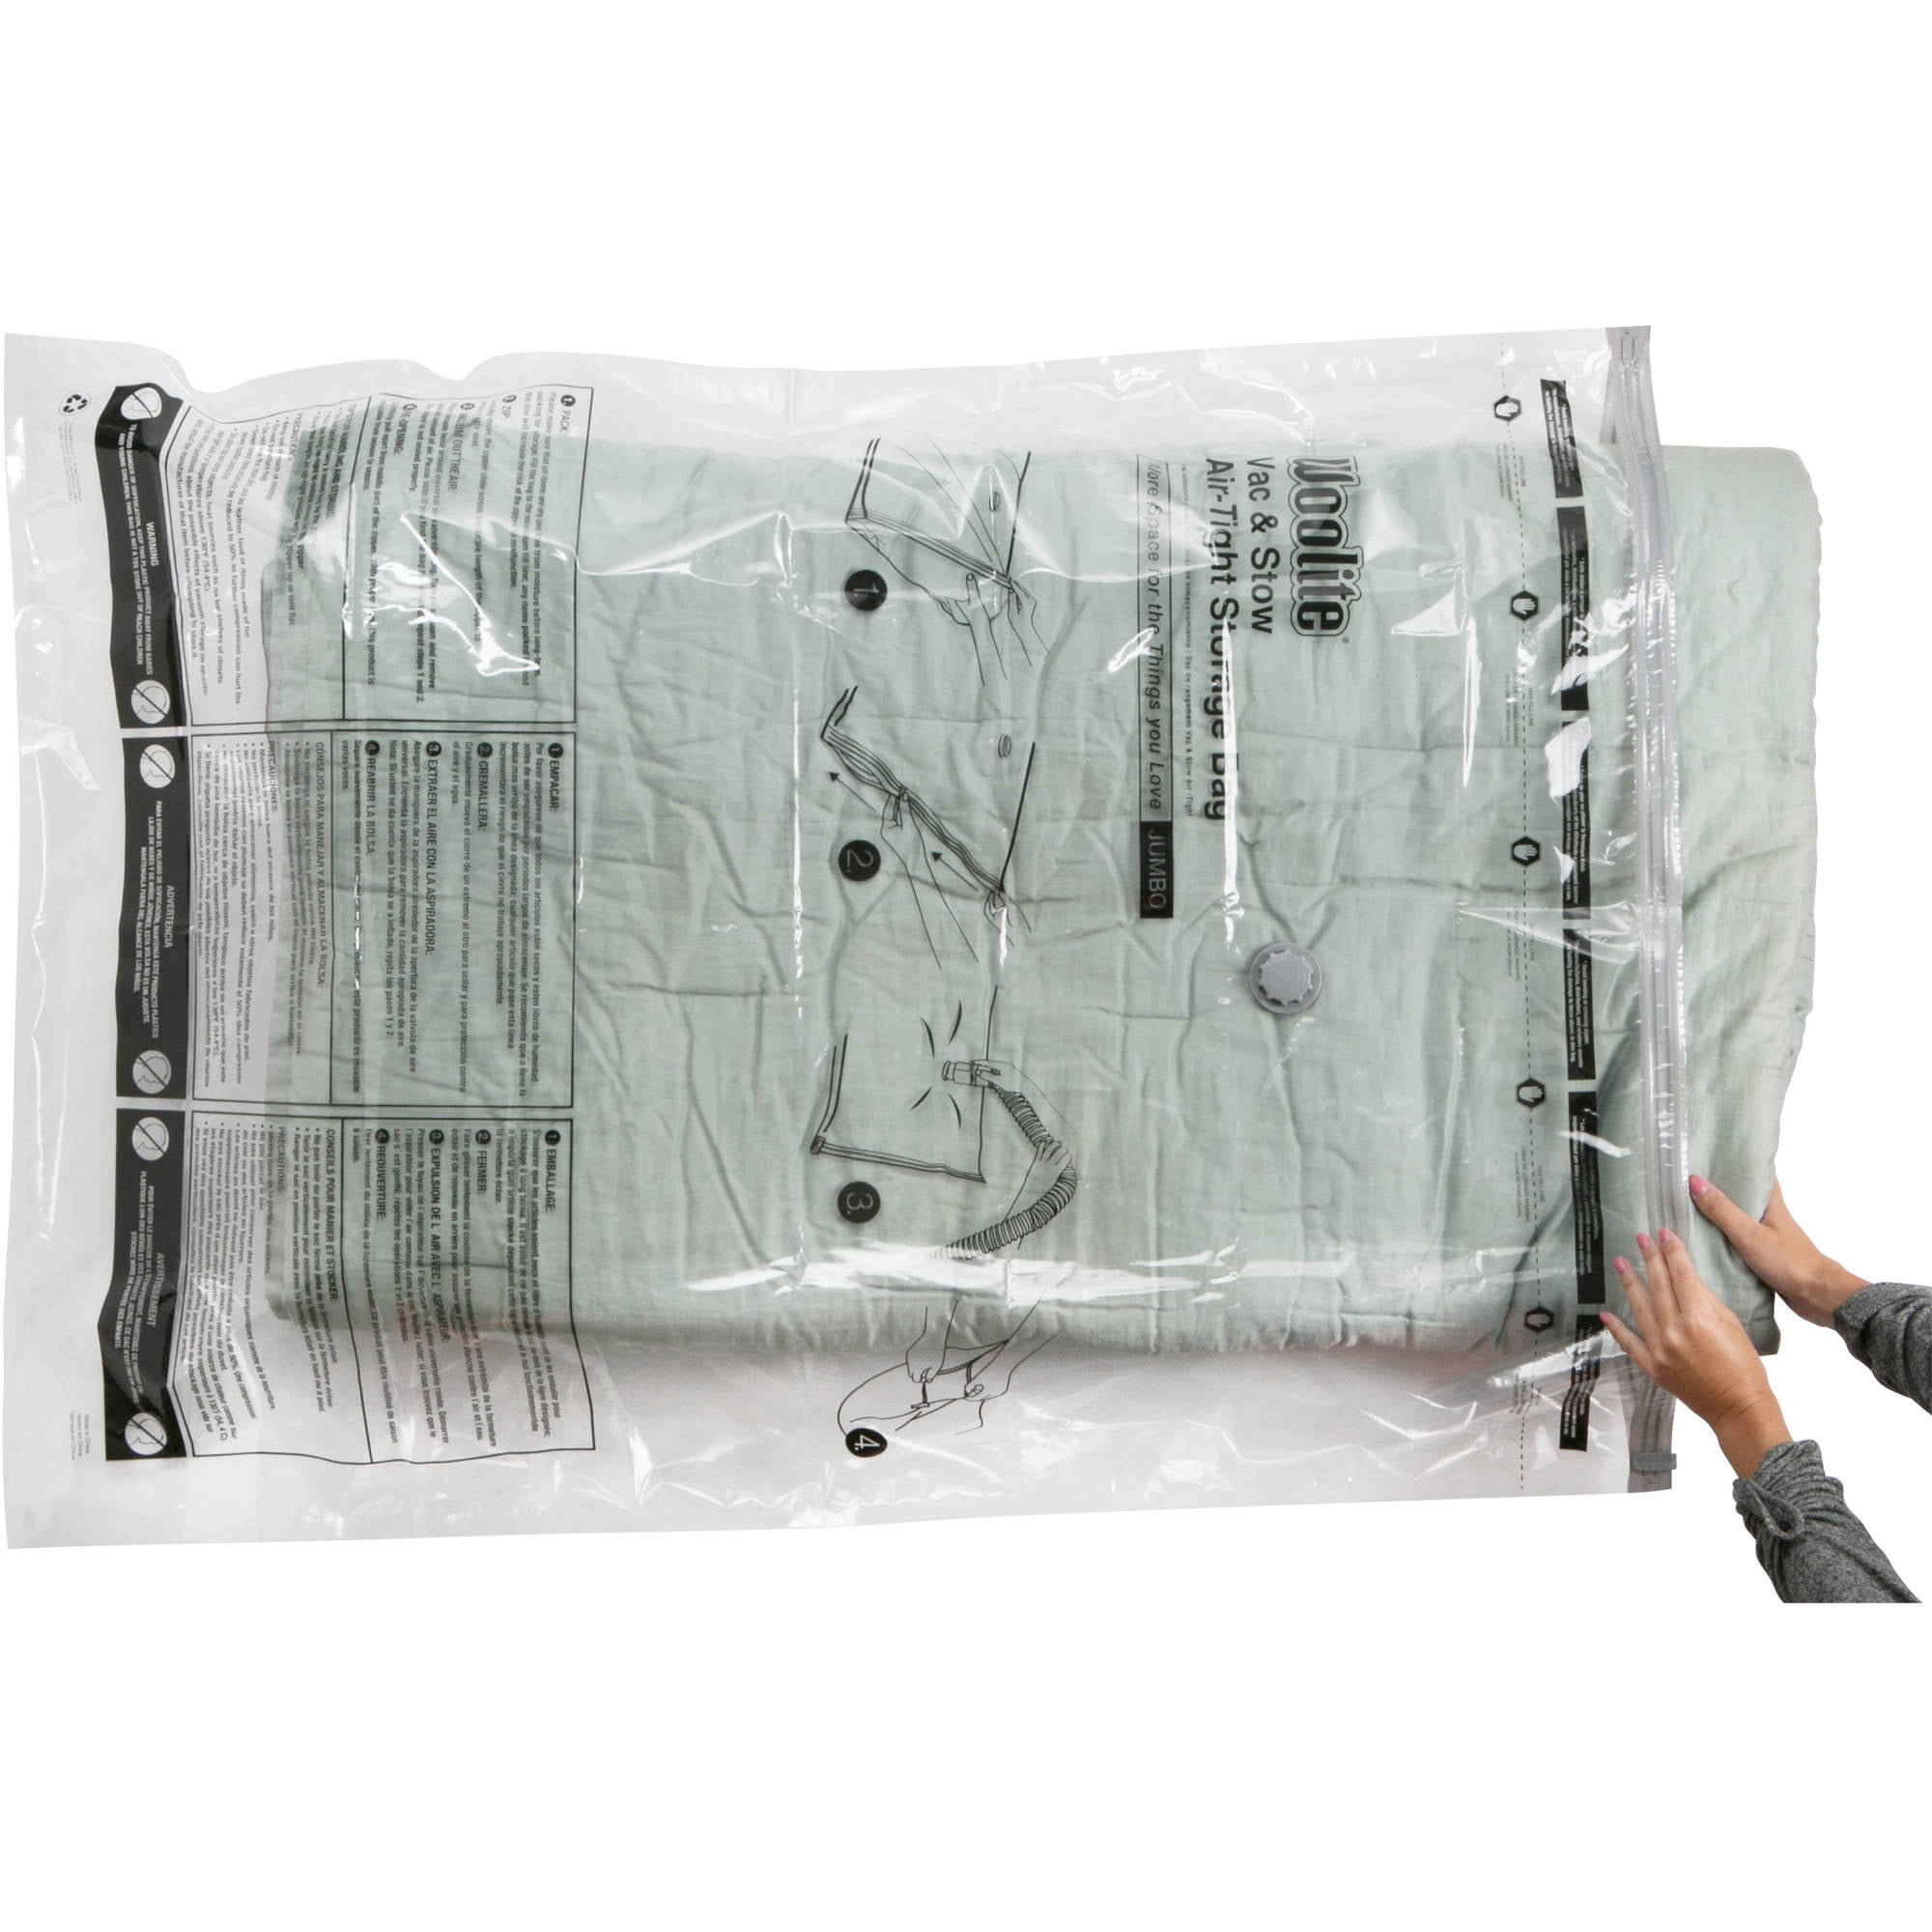 Woolite Air-Tight Storage Bags, Press & Roll, Large, 4 Pack - 4 bags